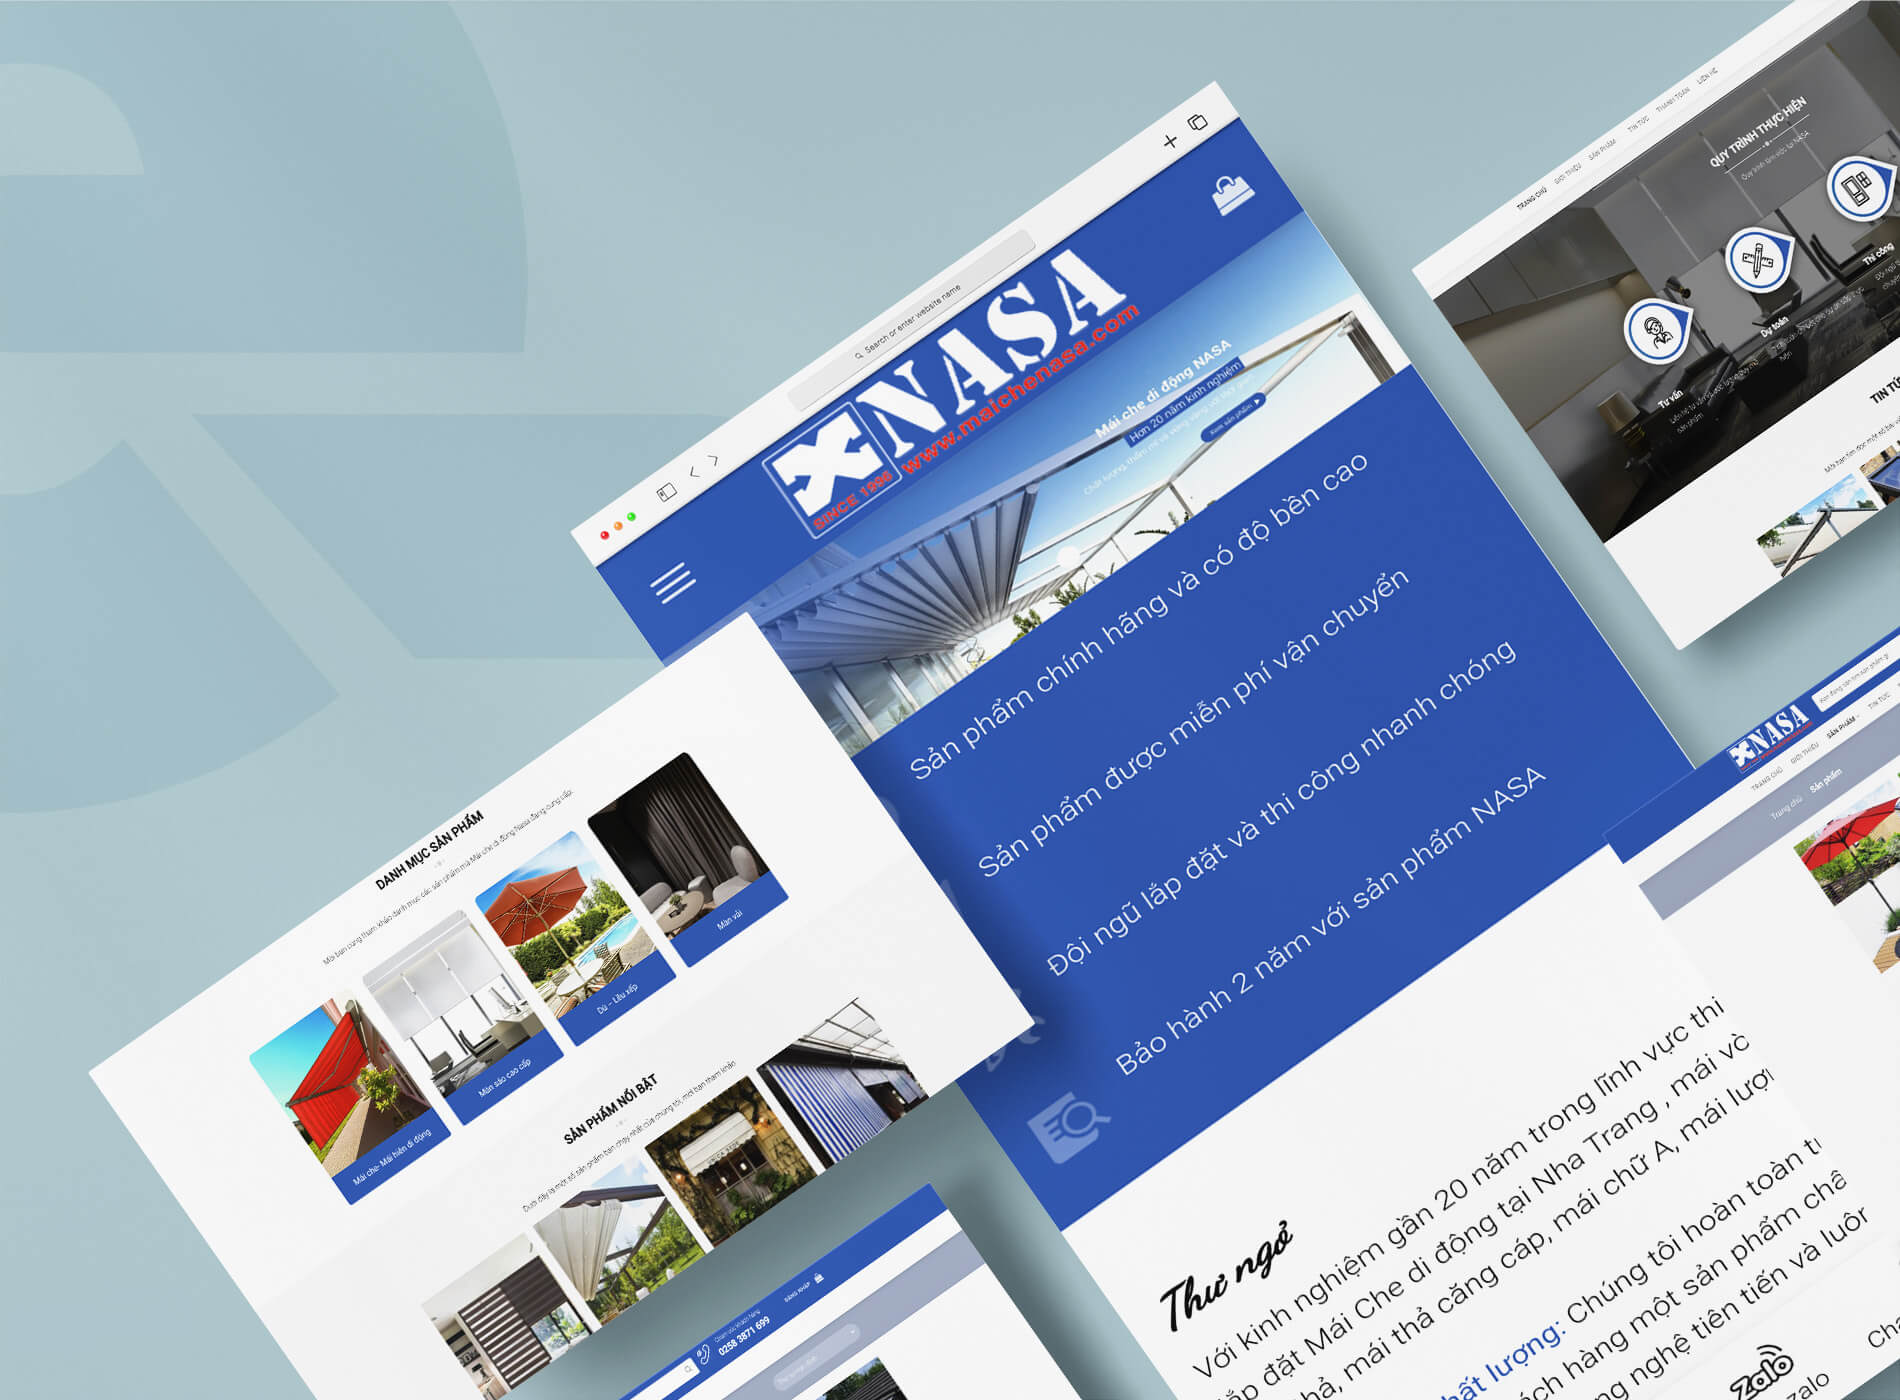 Thiết kế website tại Huế chuẩn SEO 76